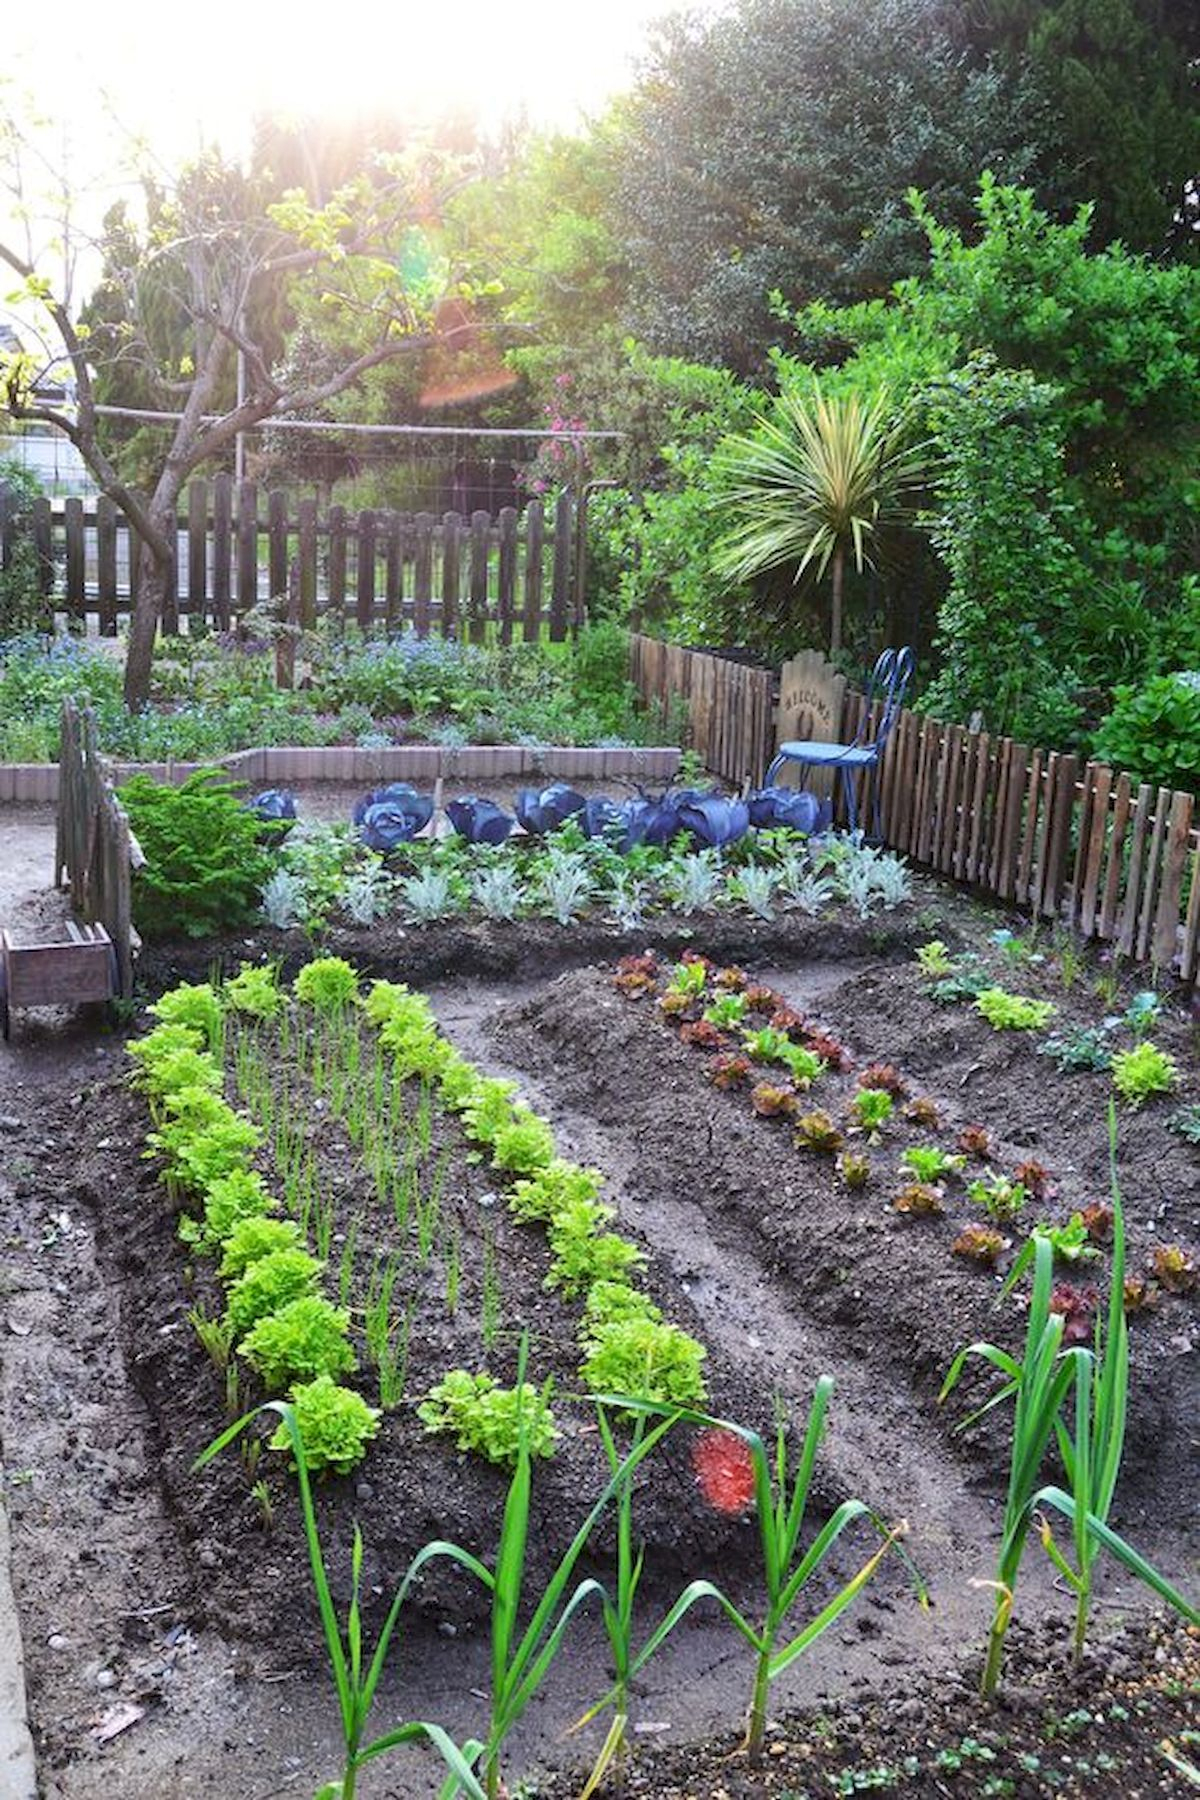  simple vegetable garden design